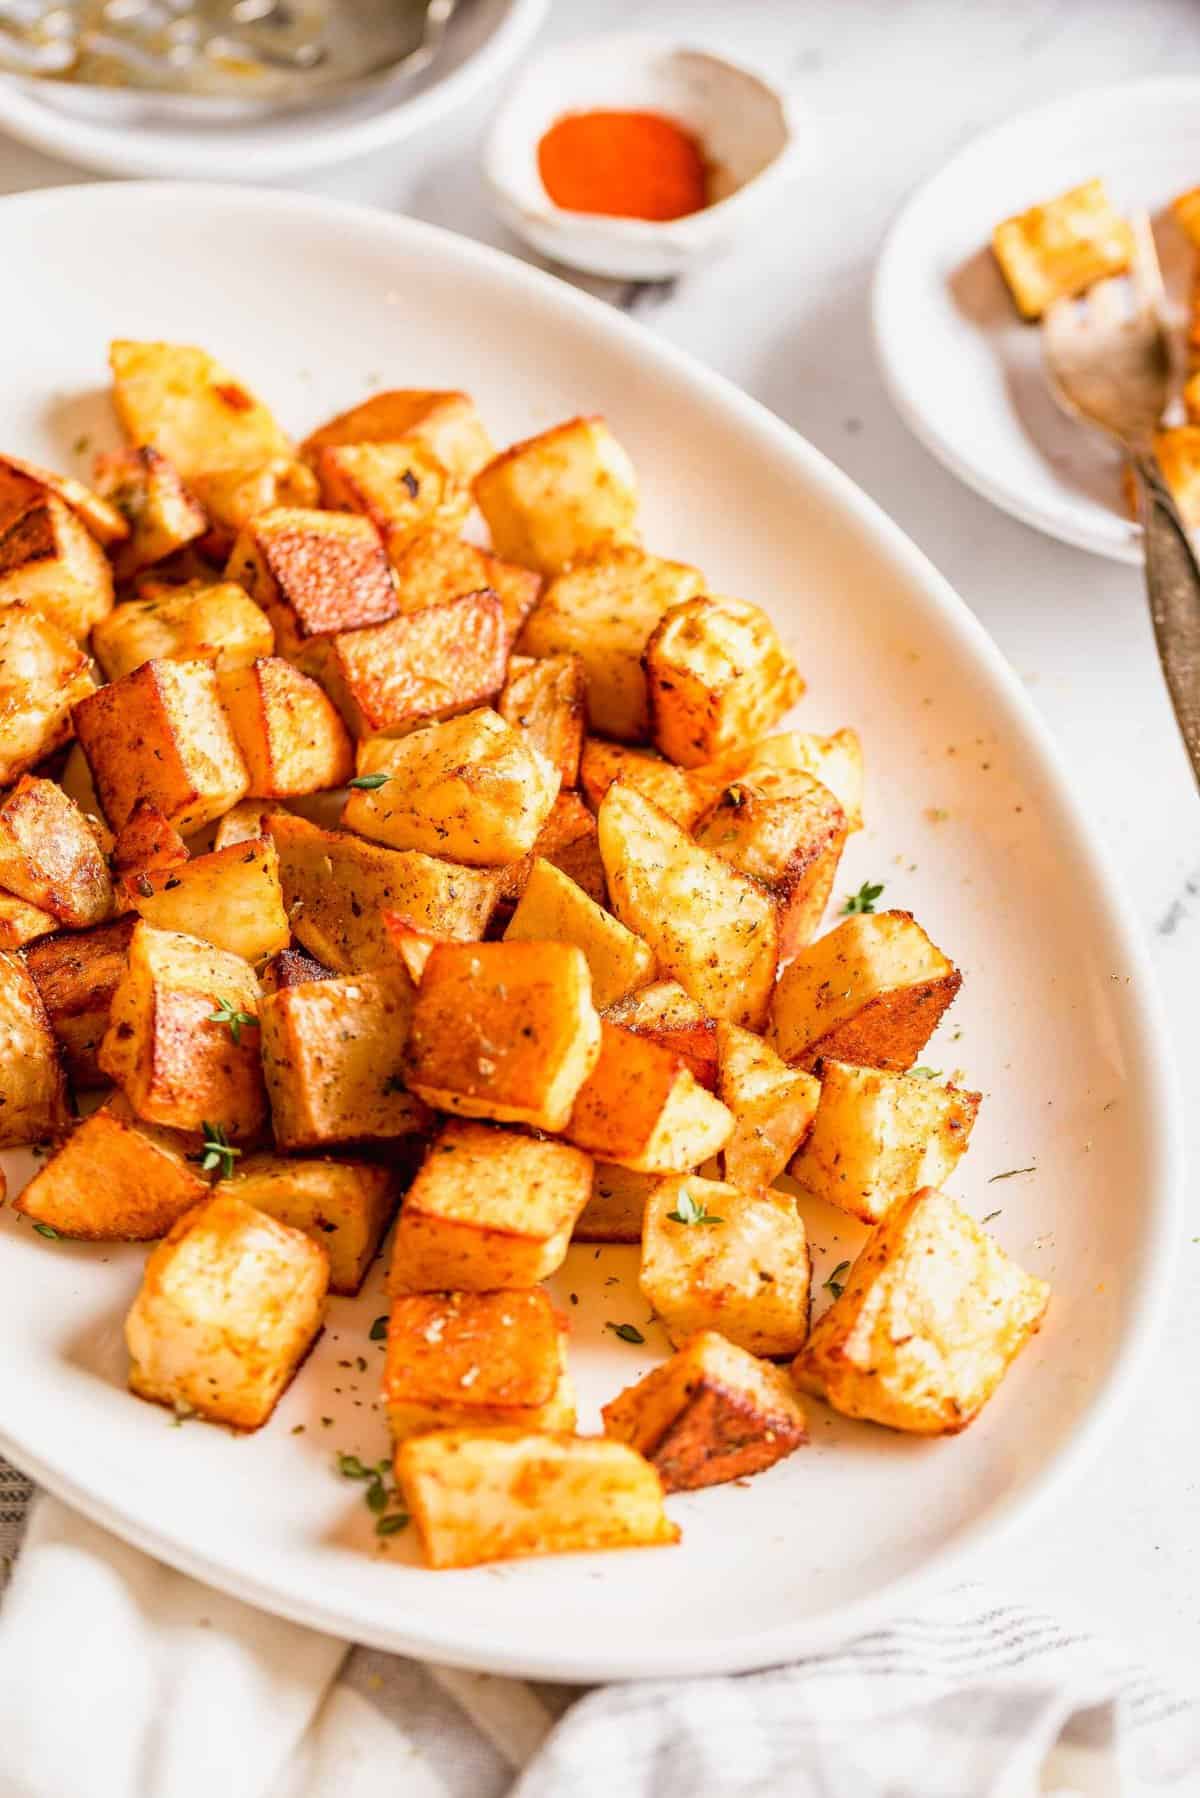 https://www.tablefortwoblog.com/wp-content/uploads/2022/11/the-best-roasted-potatoes-recipe-photo-tablefortwoblog-2-scaled.jpg